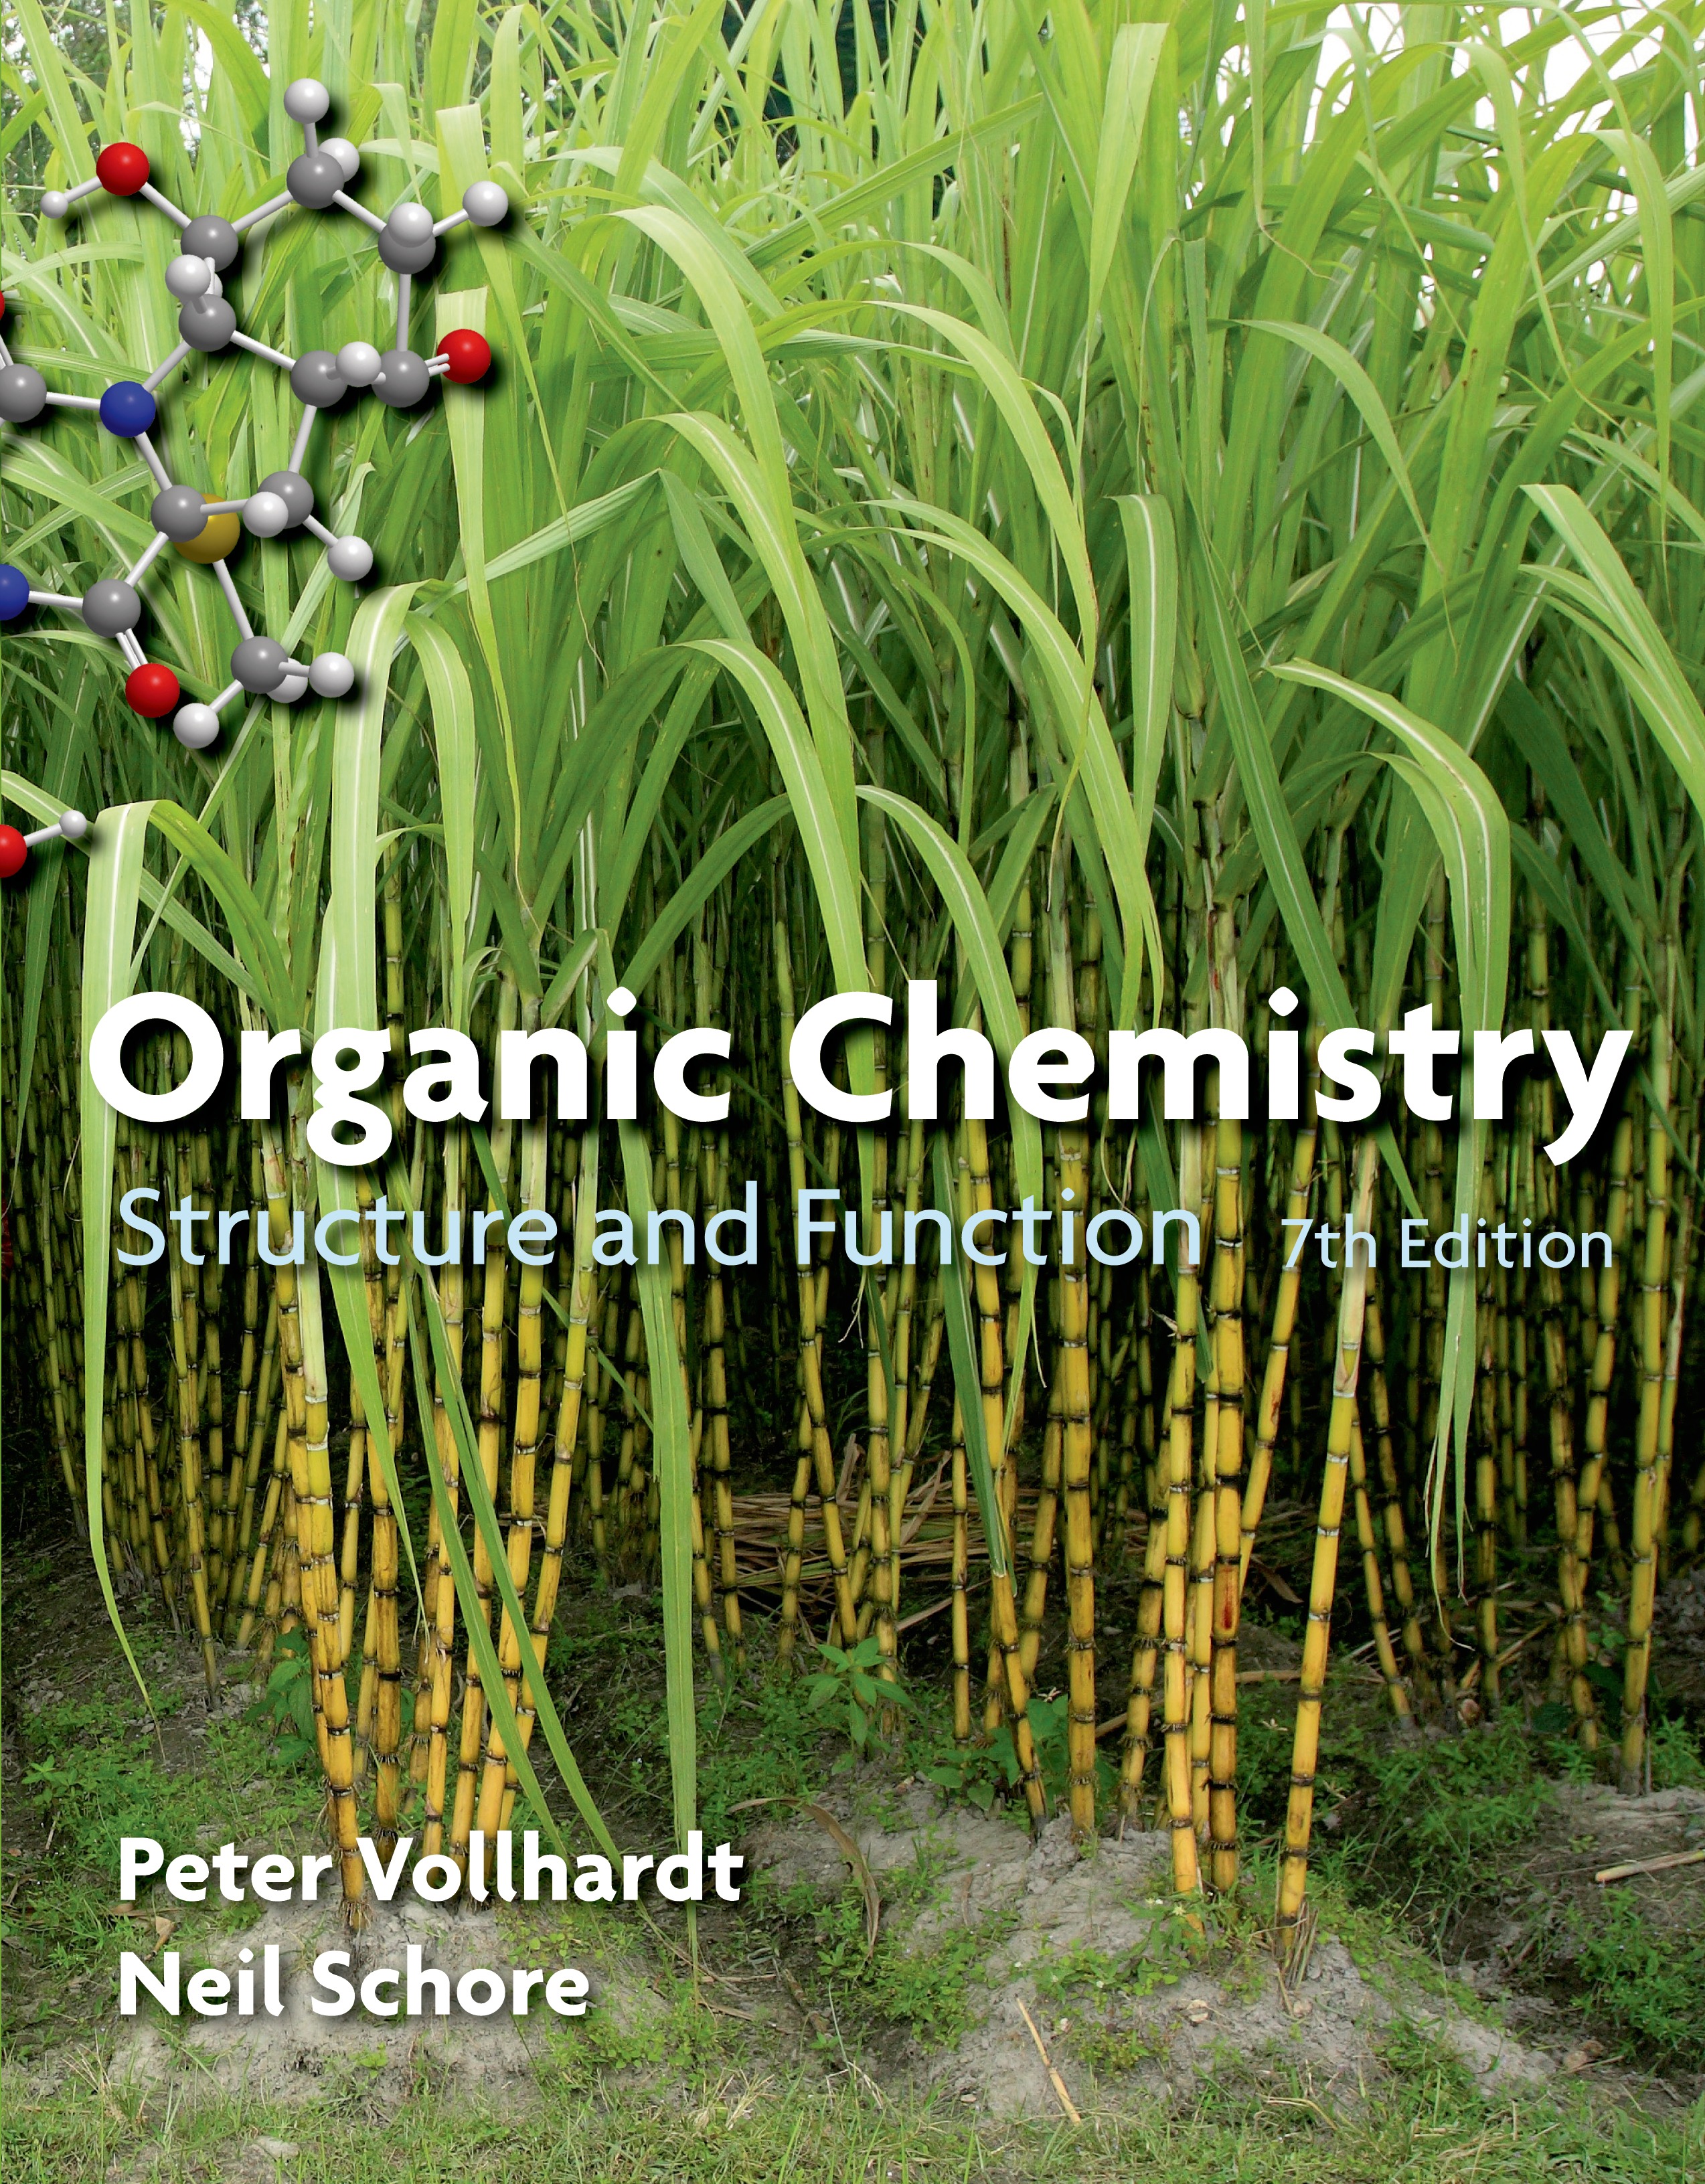 organic chemistry 10th edition pdf